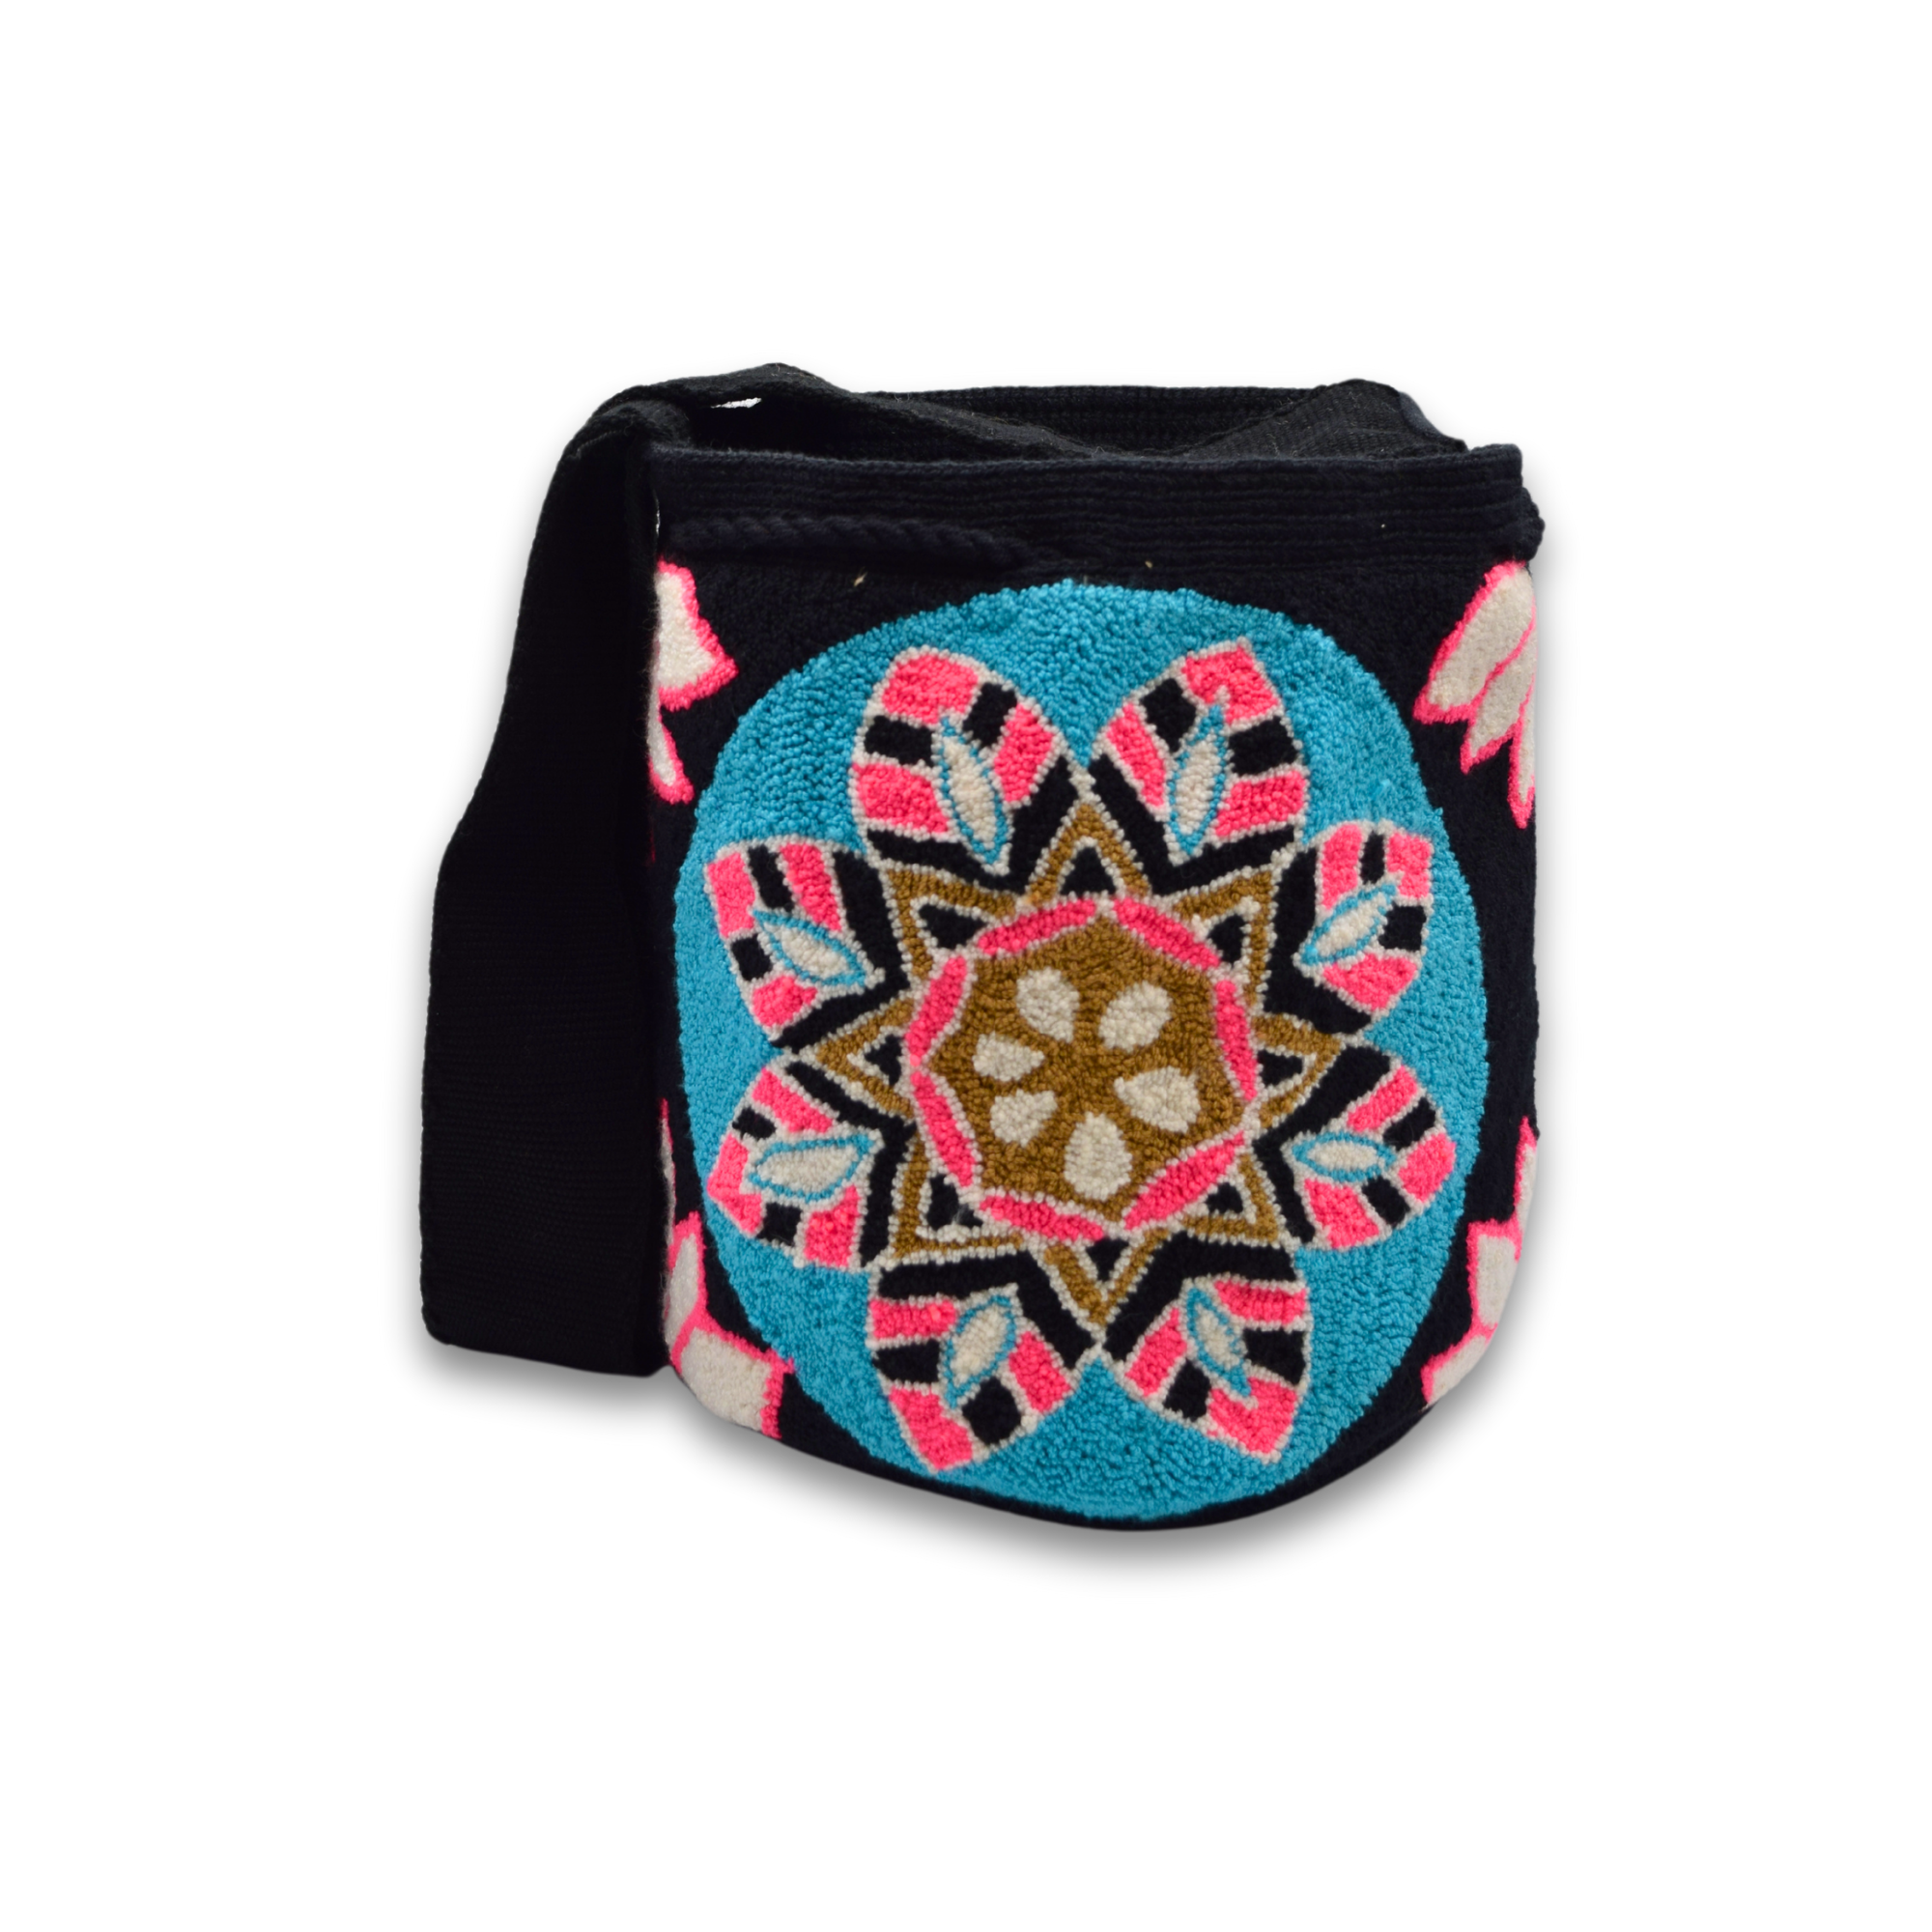 Medium Black pink neon flower Tapizada Wayuu Mochila Bag | Lined Punch Needle Crossbody Shoulder Bag | Handmade in Colombia